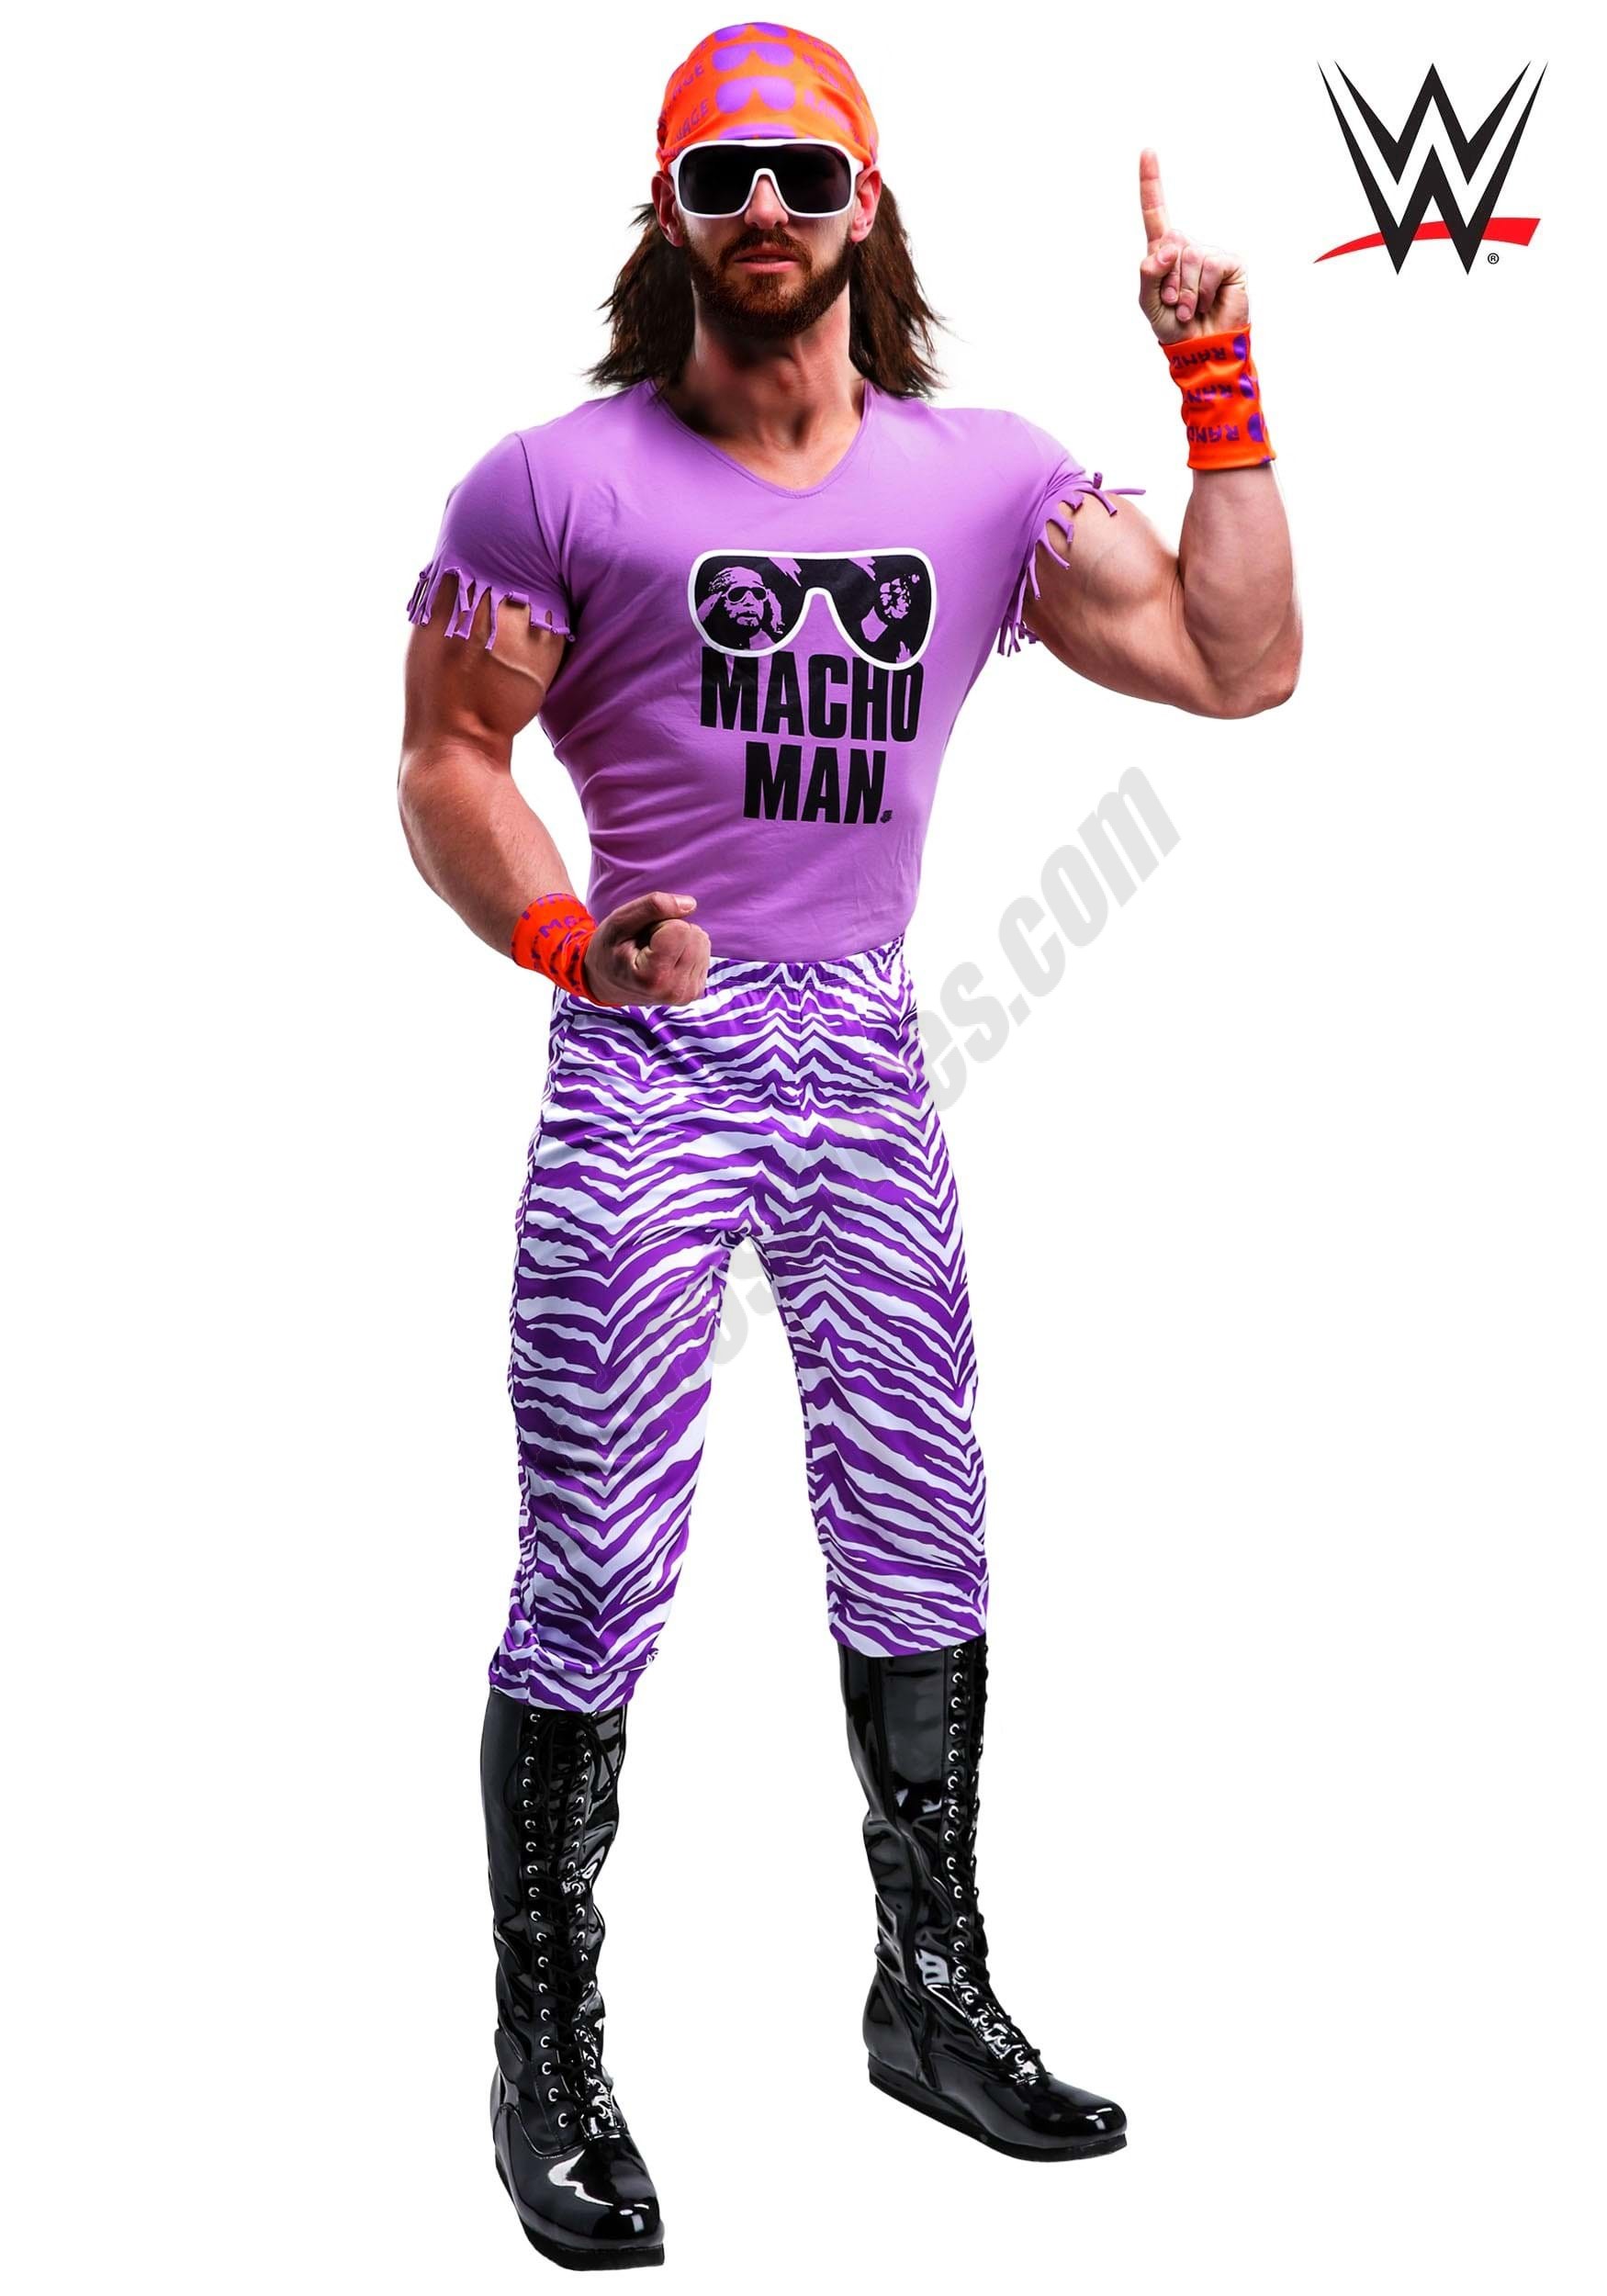 Macho Man Madness WWE Adult Costume - Men's - Macho Man Madness WWE Adult Costume - Men's